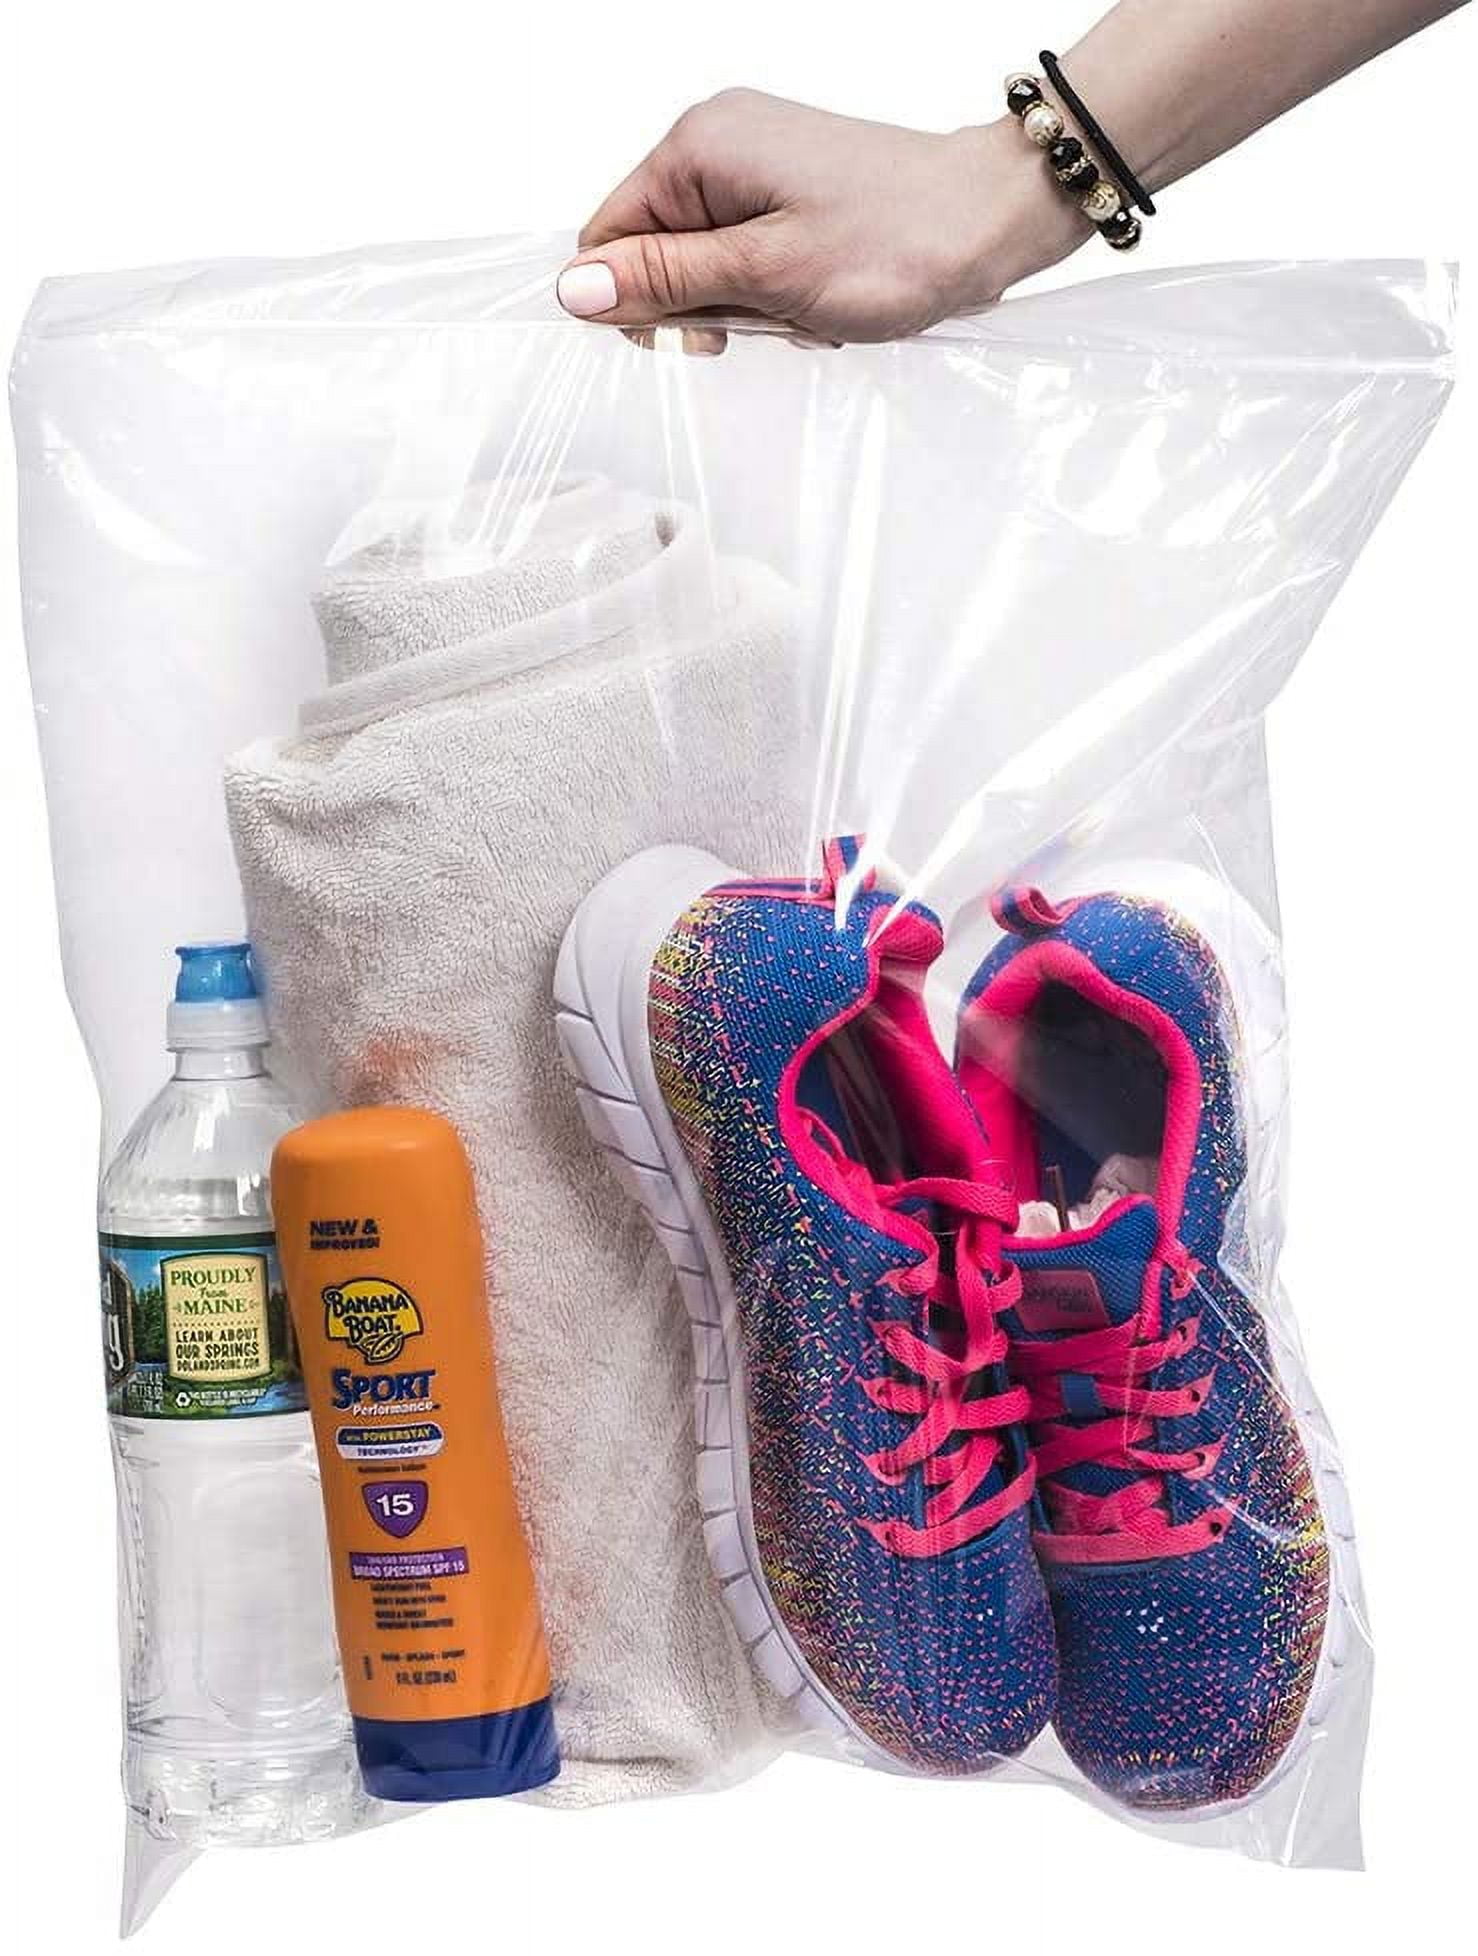 Hefty Slider Quart Freezer Bags - Shop Storage Bags at H-E-B